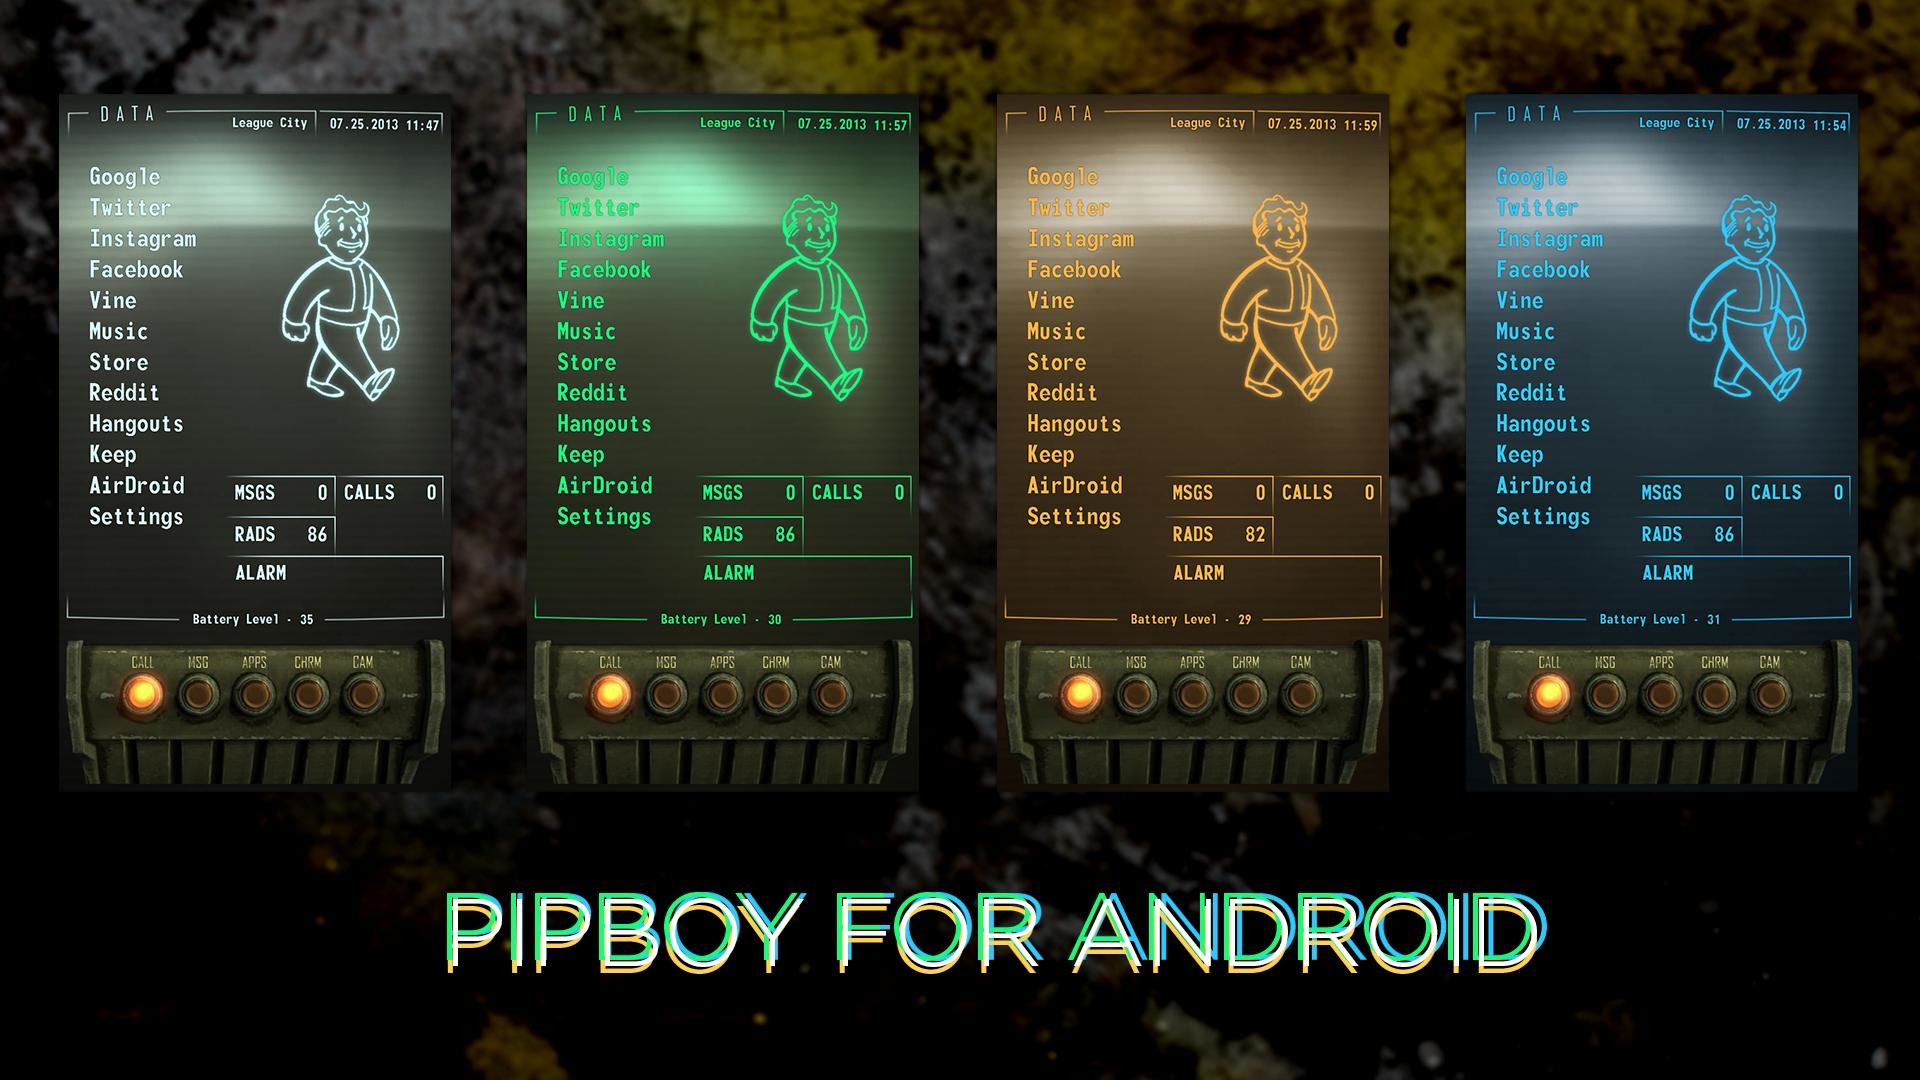 fallout wallpaper android,technology,font,screenshot,digital compositing